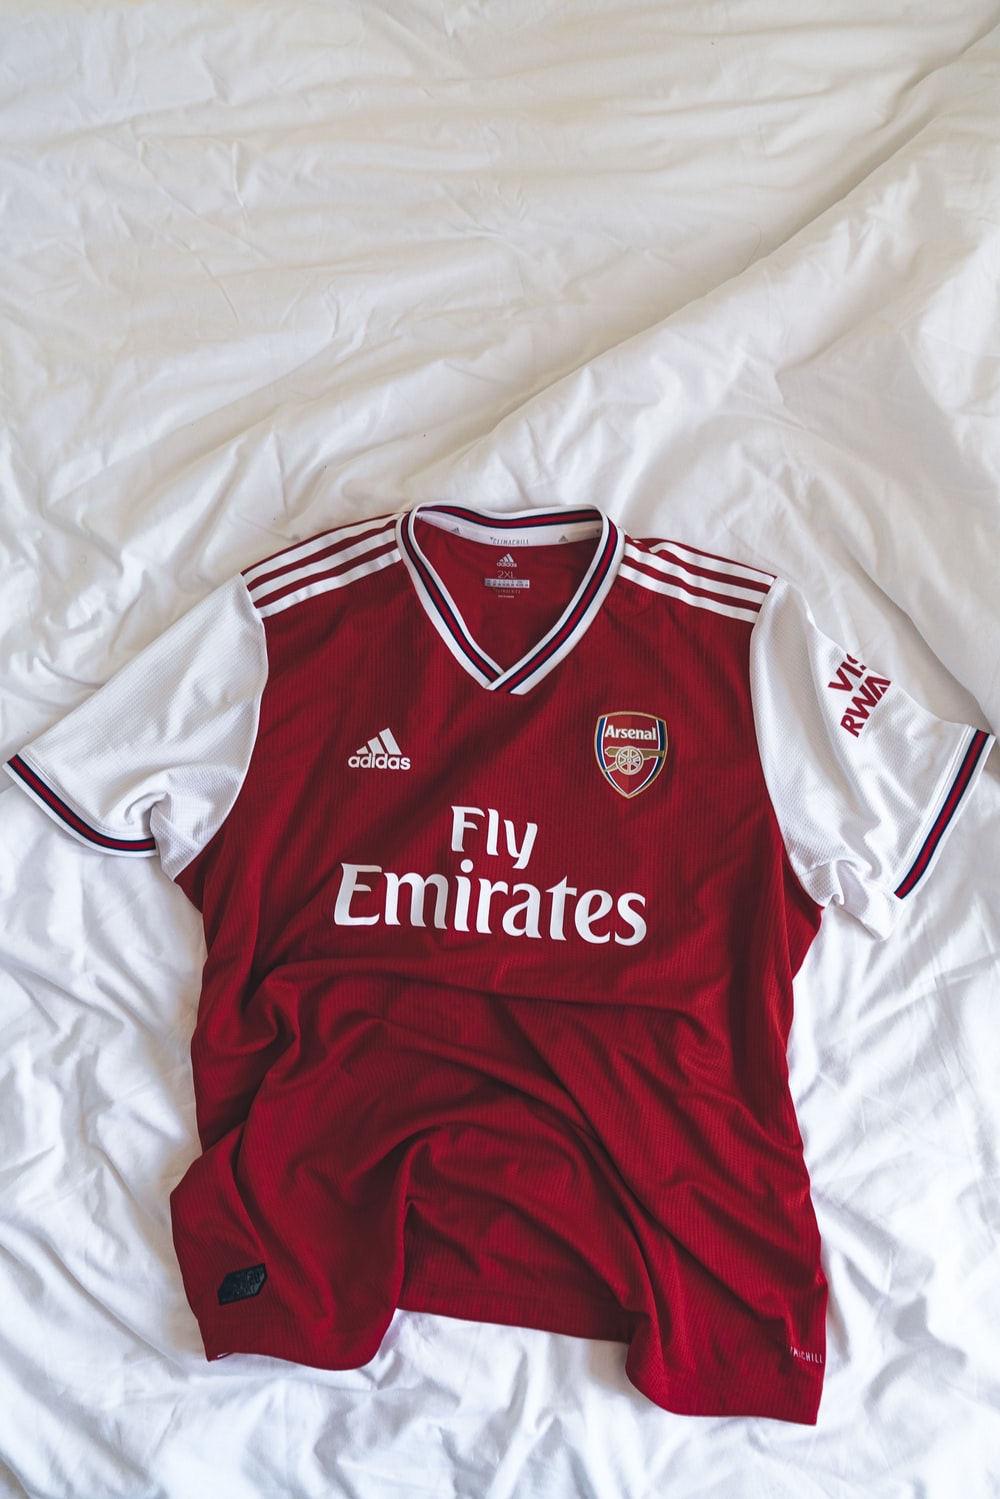 A Emirates shirt